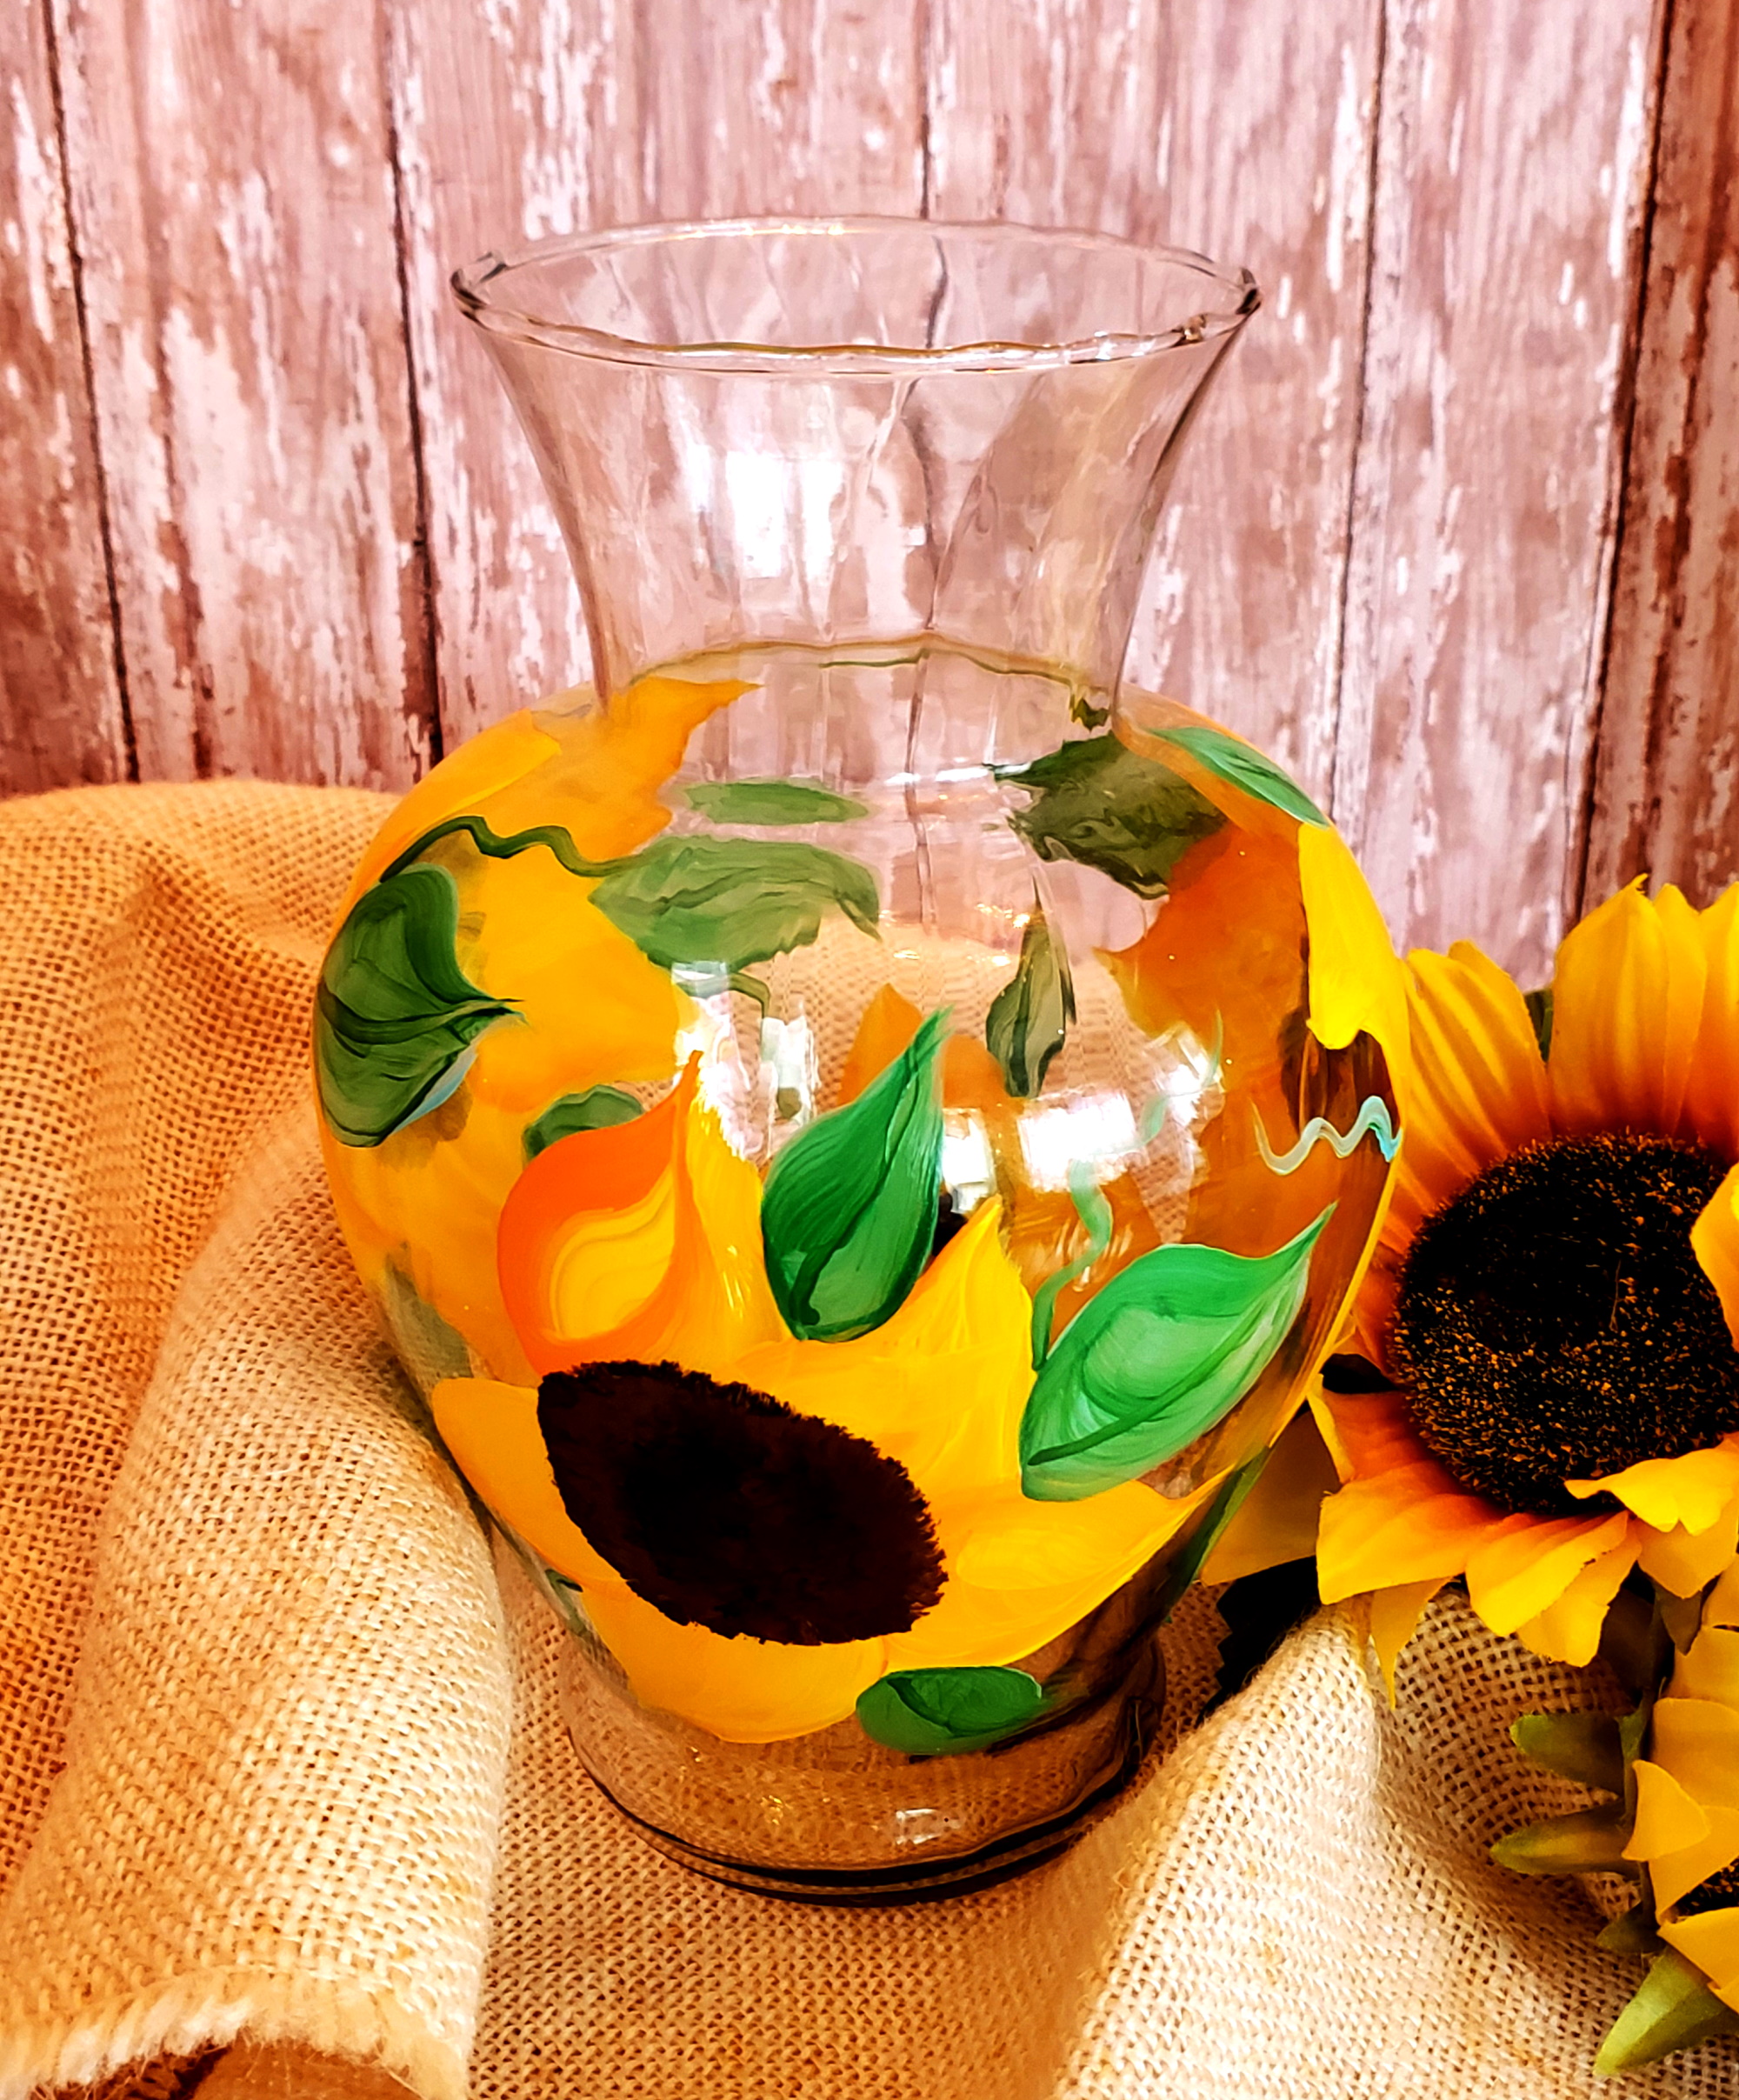 Glass Flowers - Sunflowers